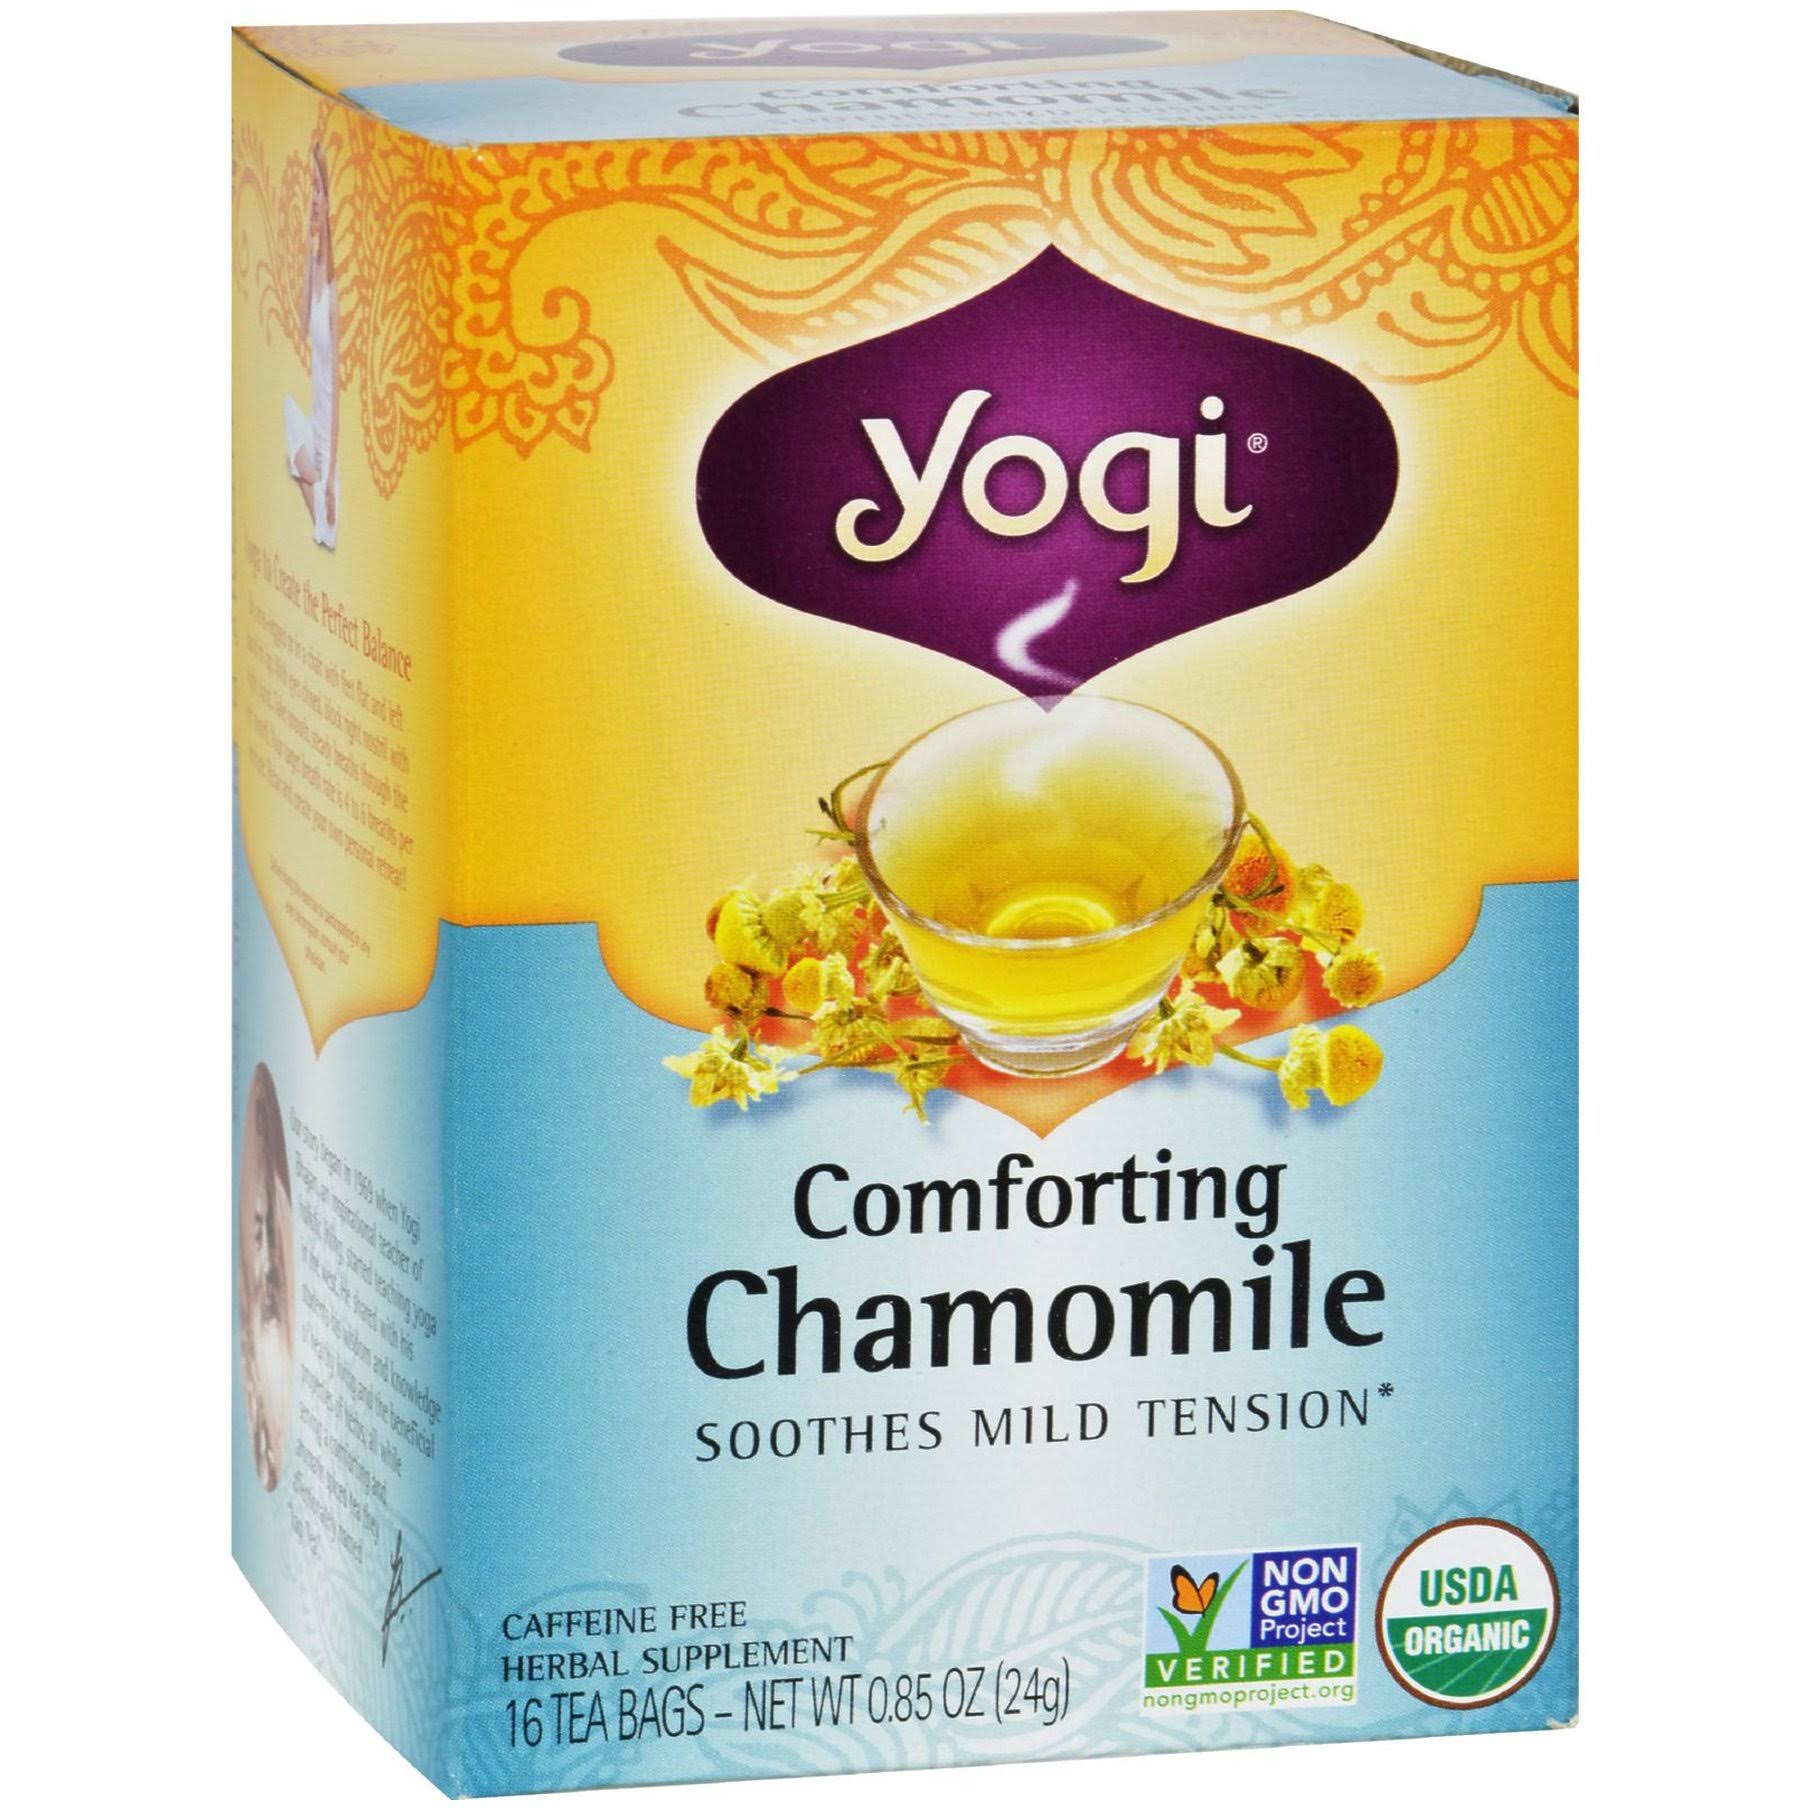 Yogi Comforting Chamomile Tea - 16 Tea Bags